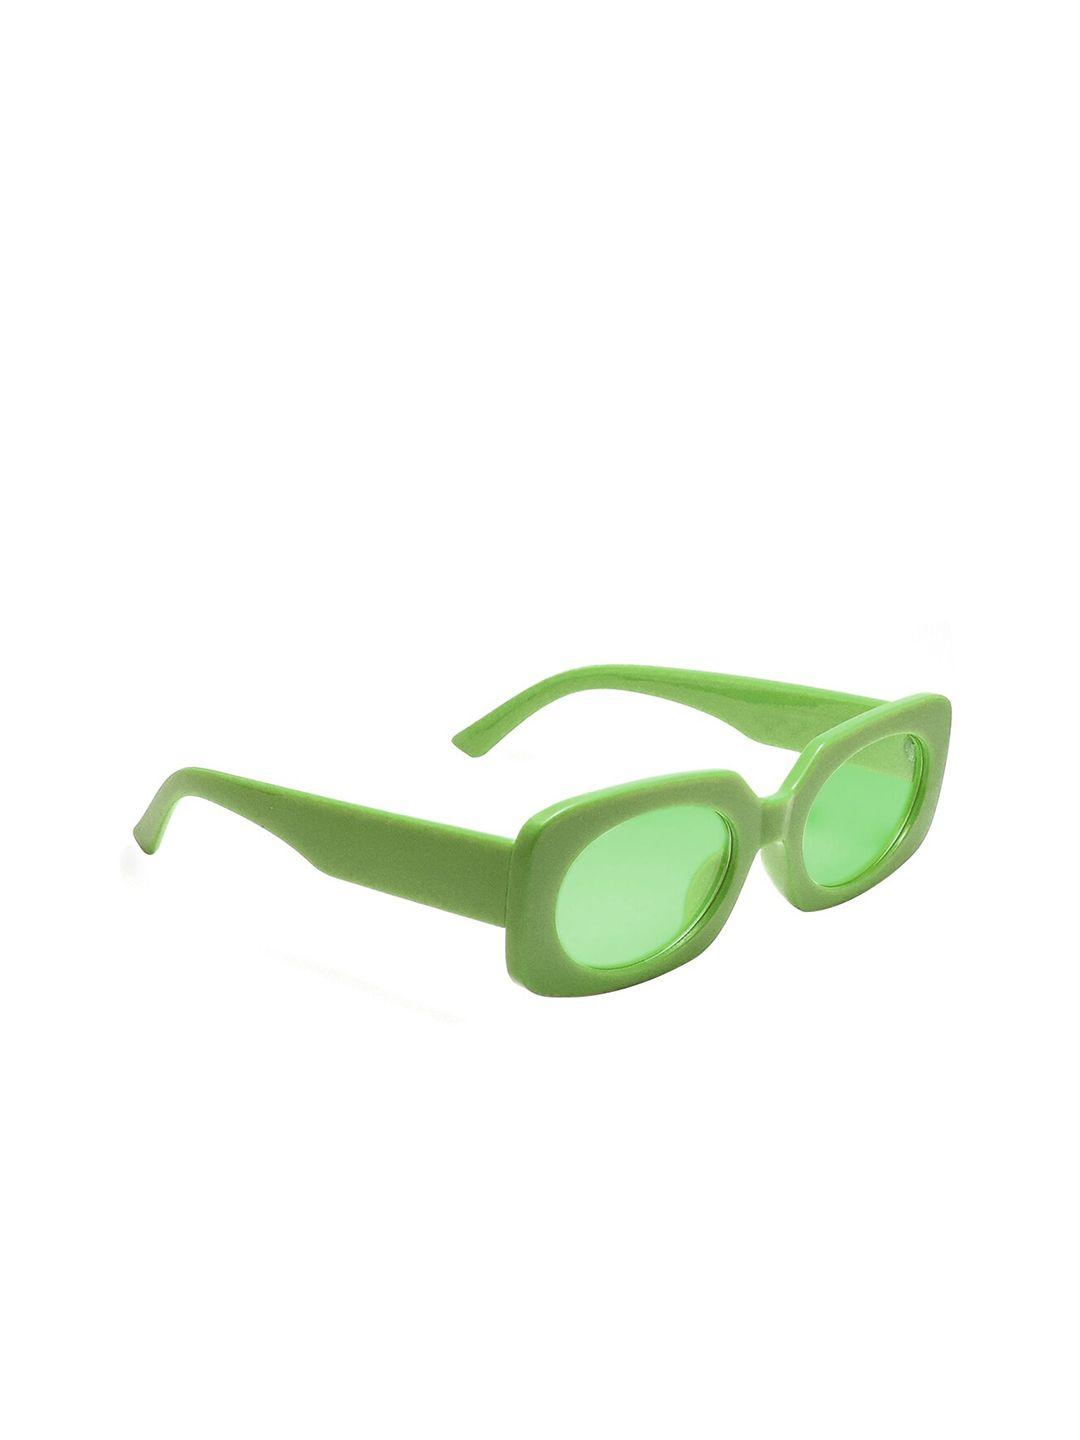 peter jones eyewear unisex green lens full rim square sunglasses